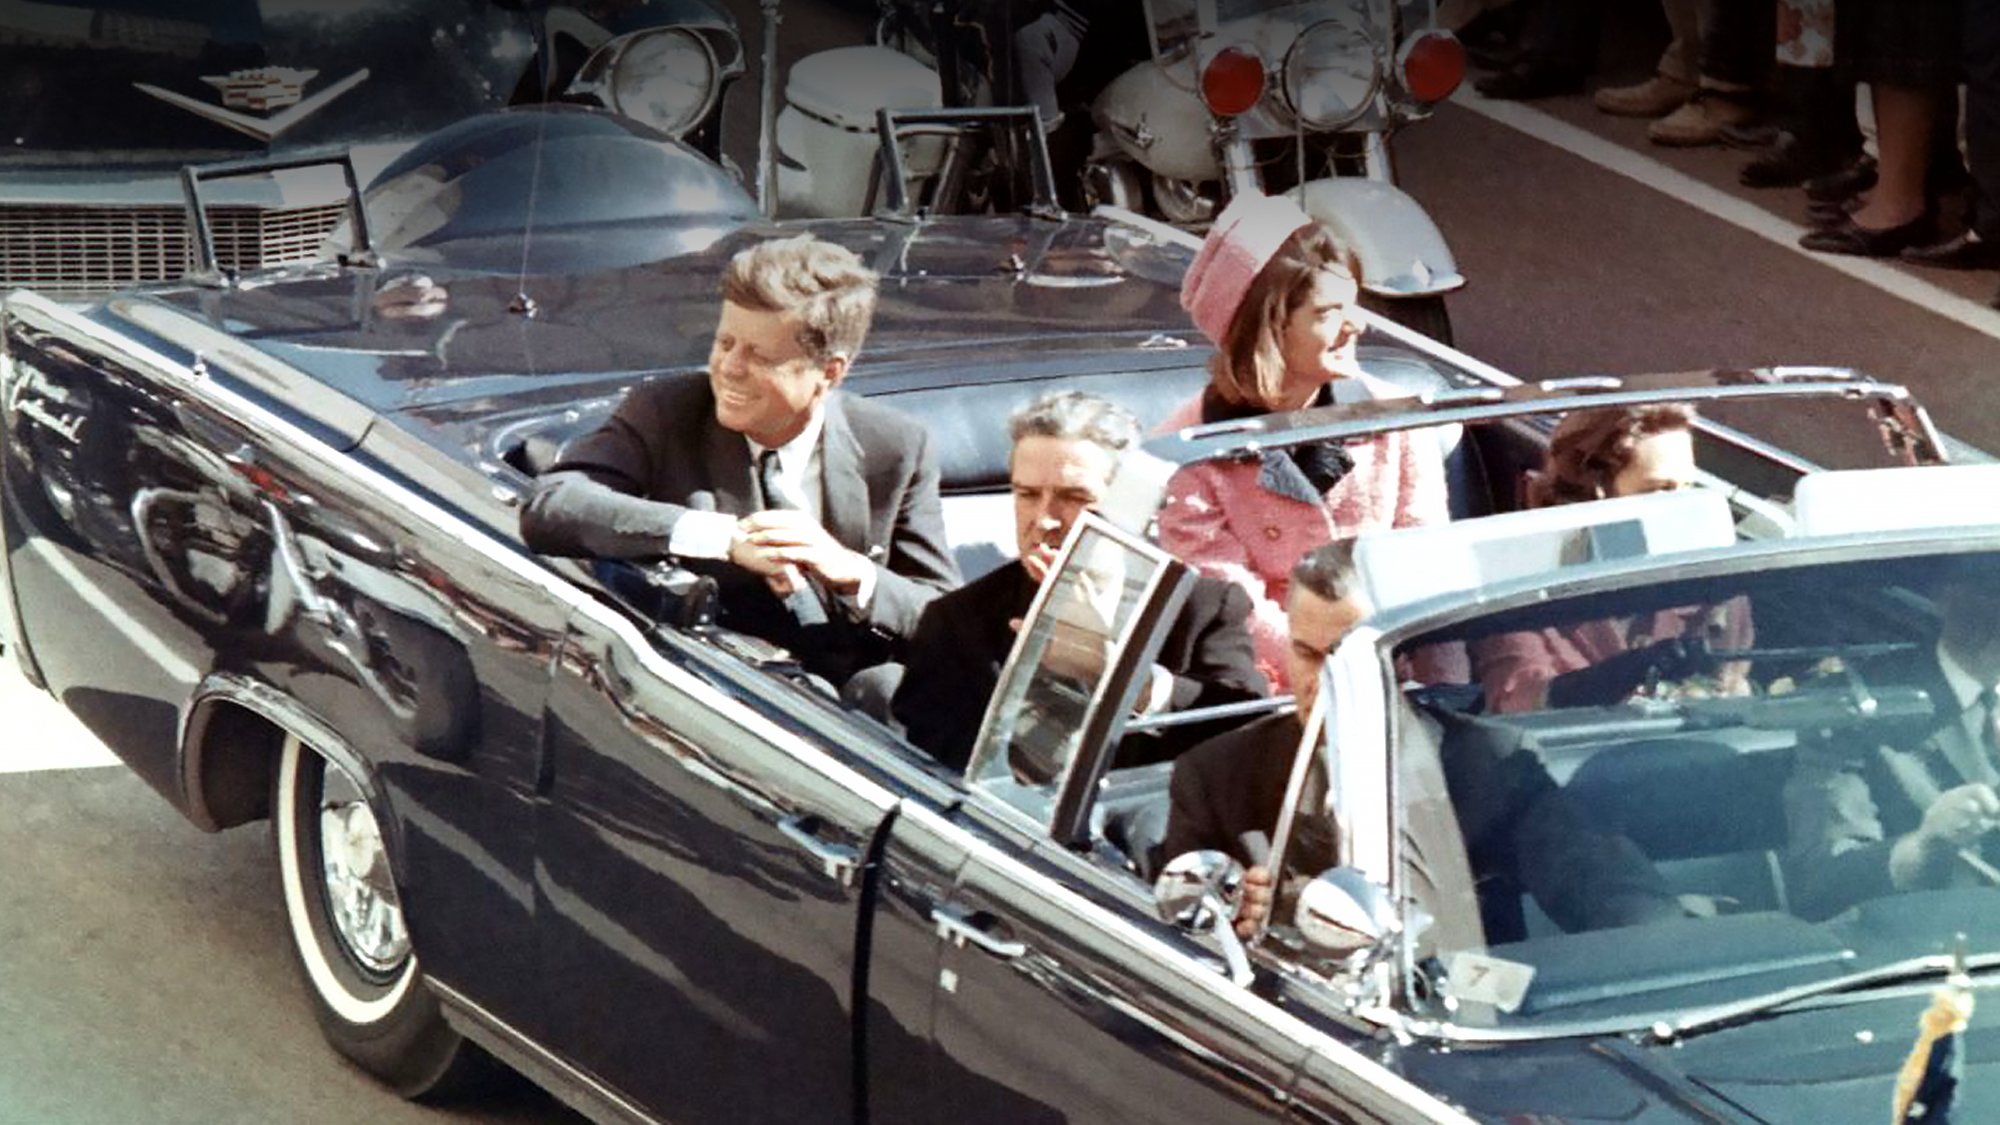 JFK: Caso revisado